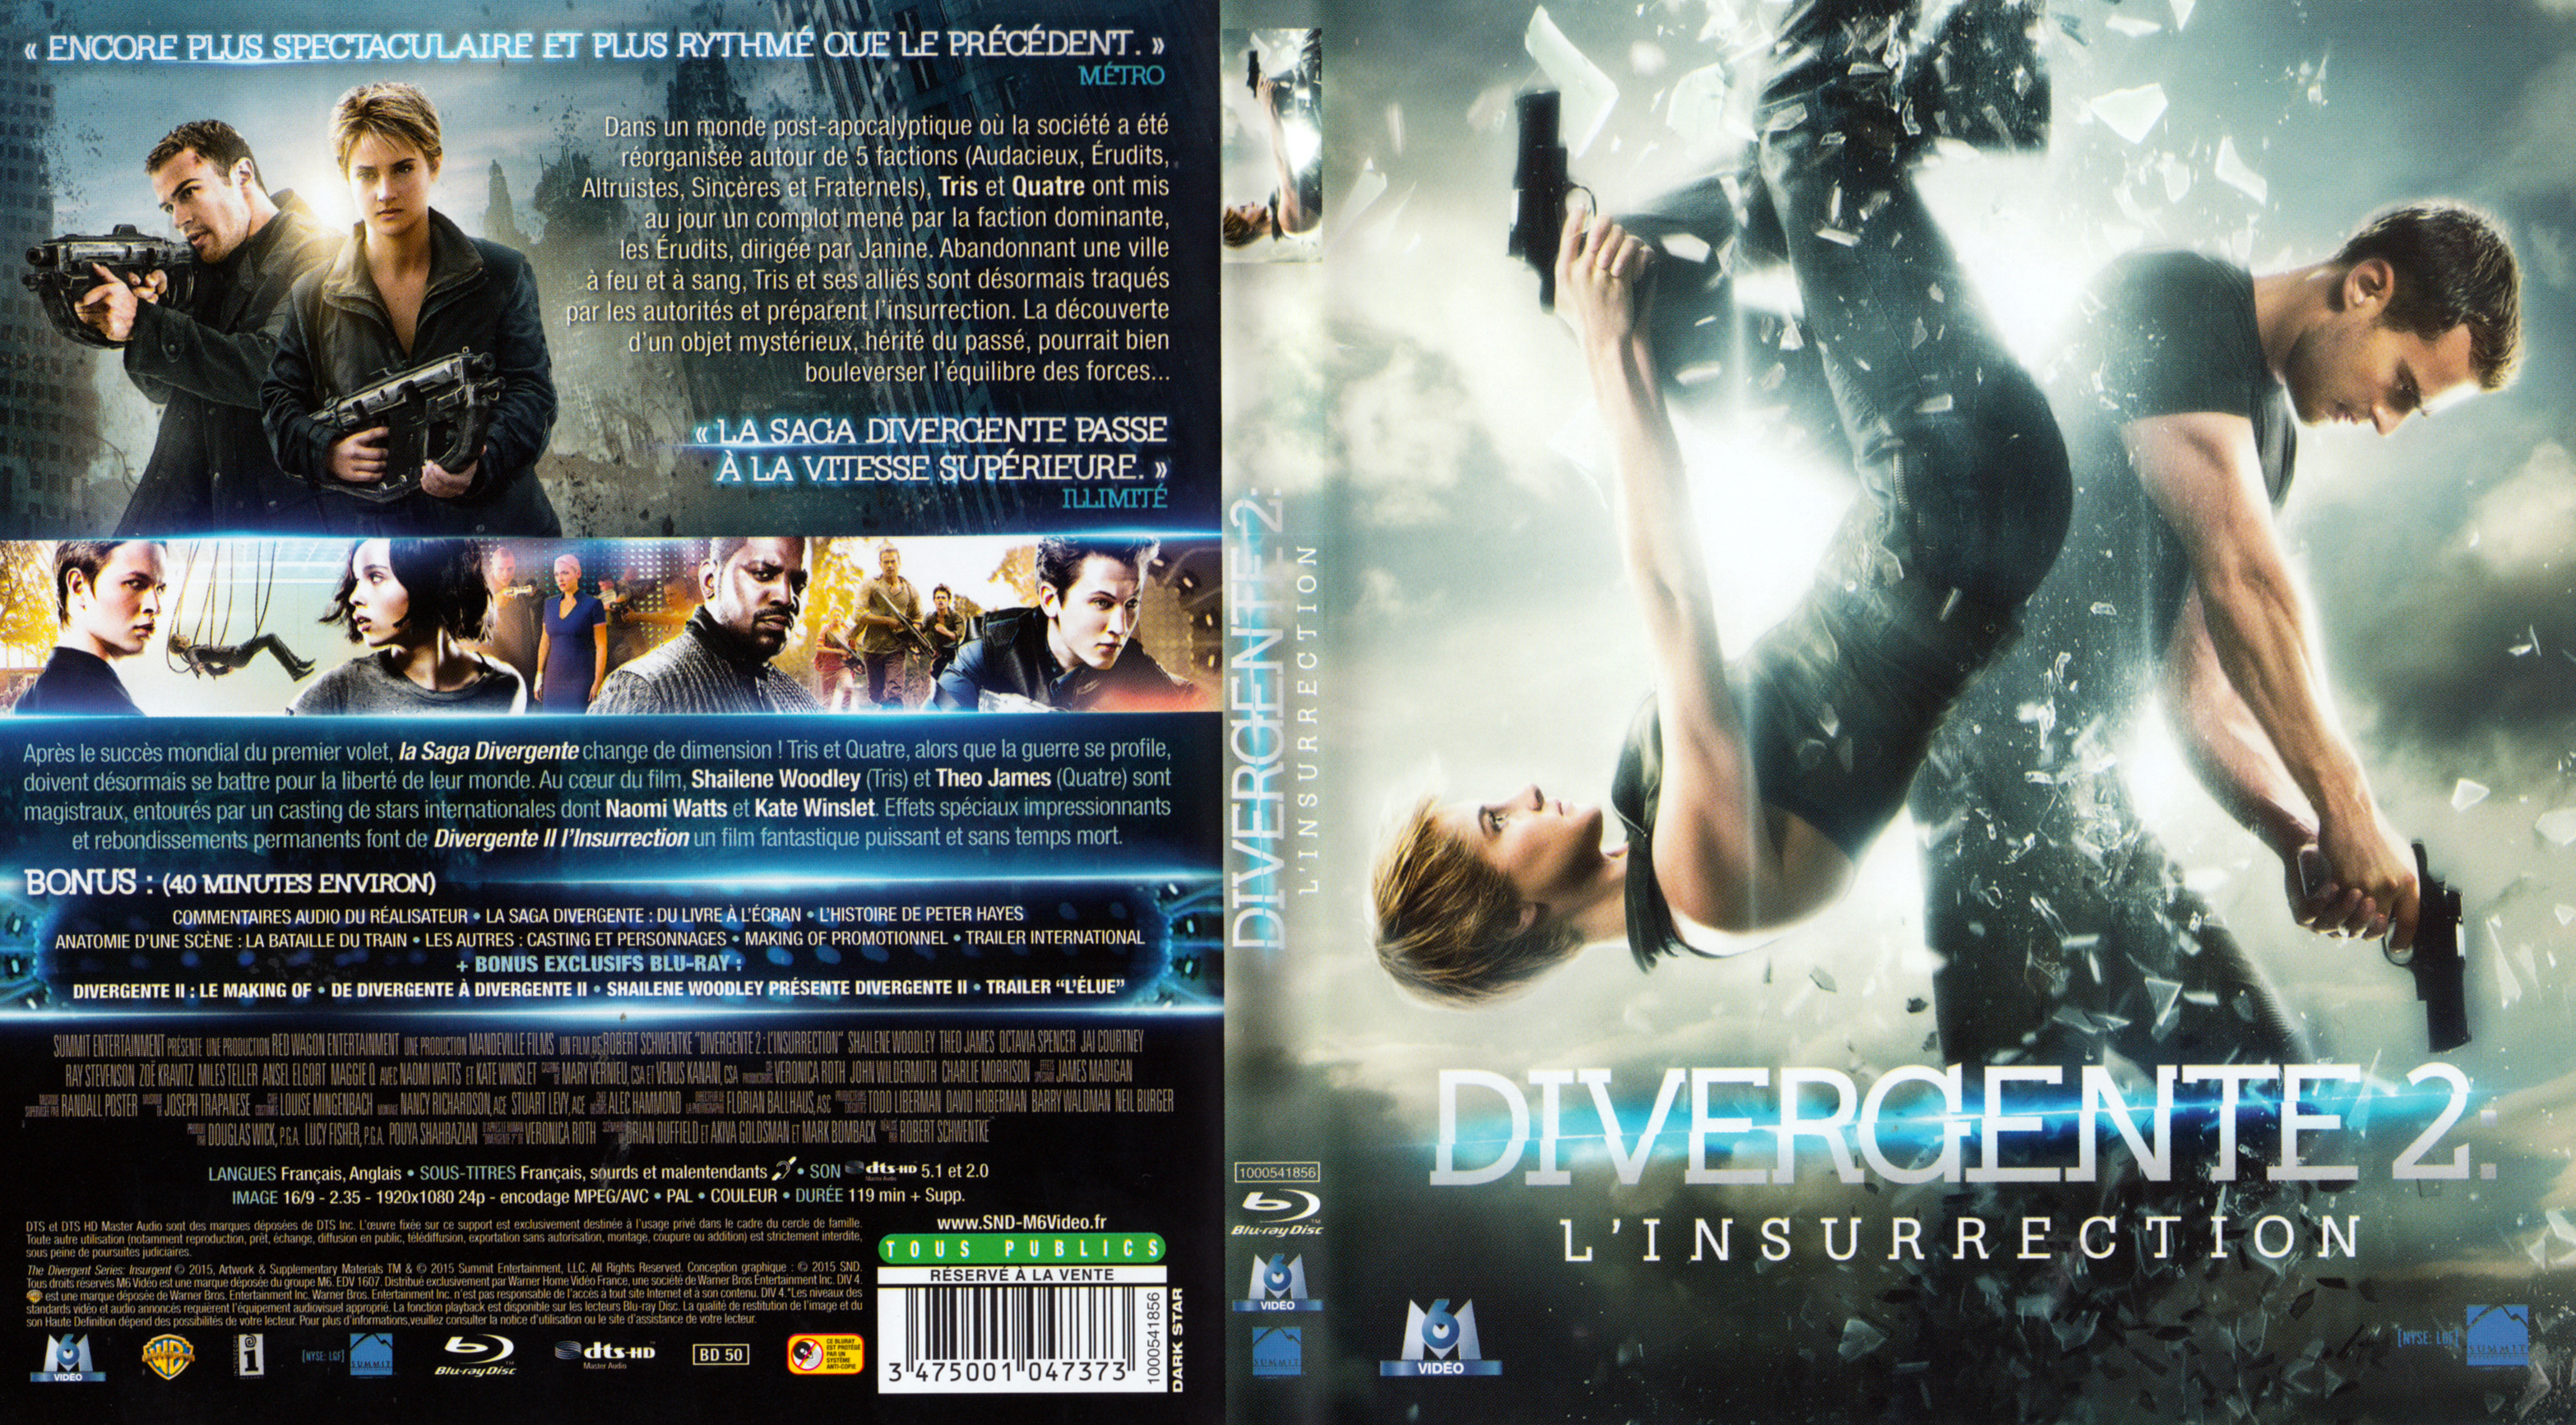 Jaquette DVD Divergente 2 (BLU-RAY)